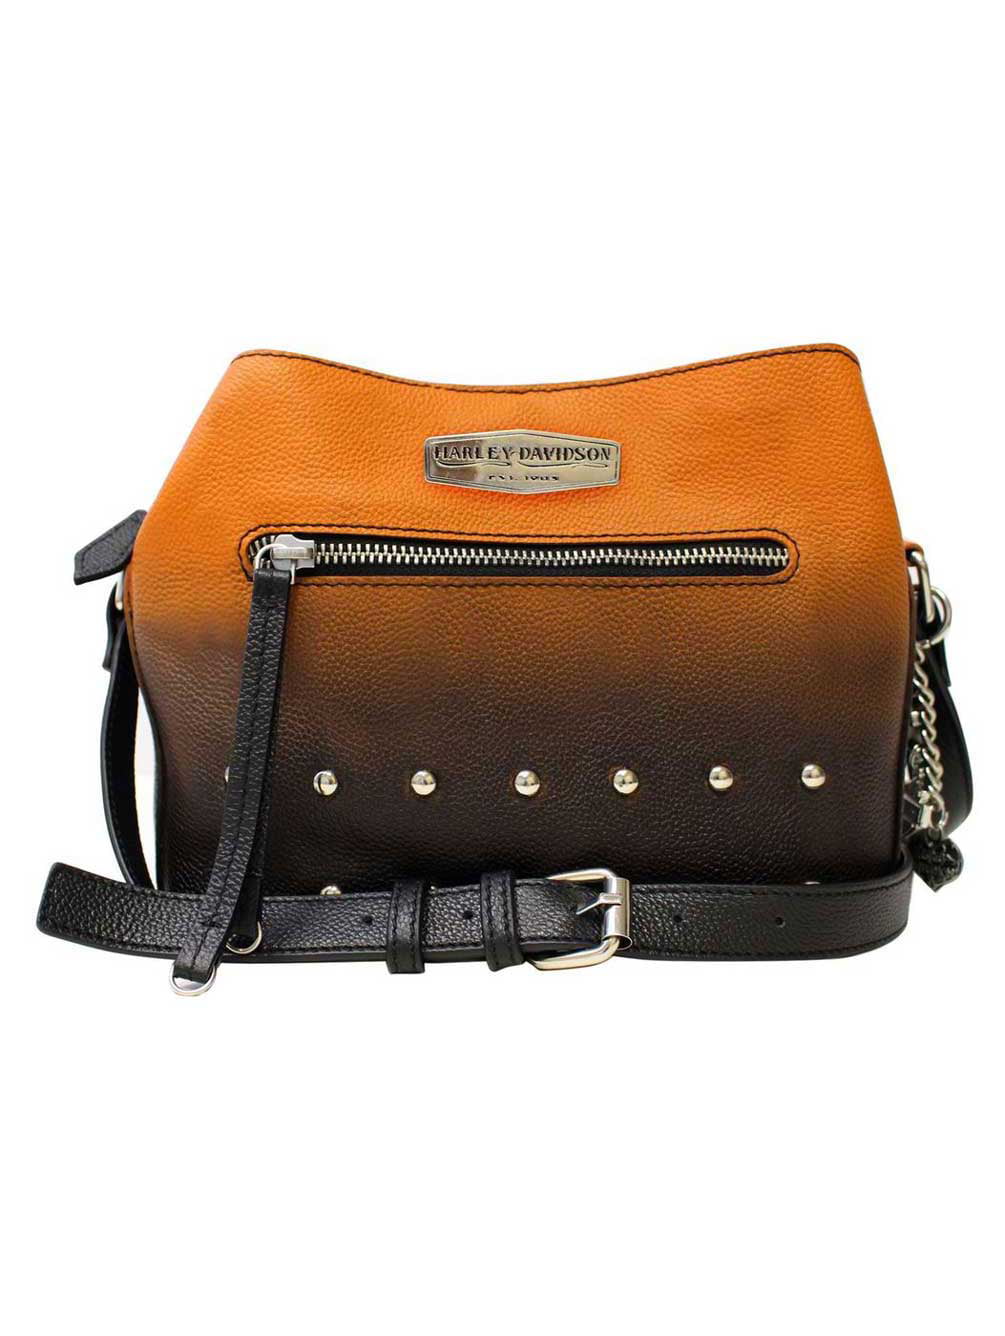 Harley Davidson orange leather purse